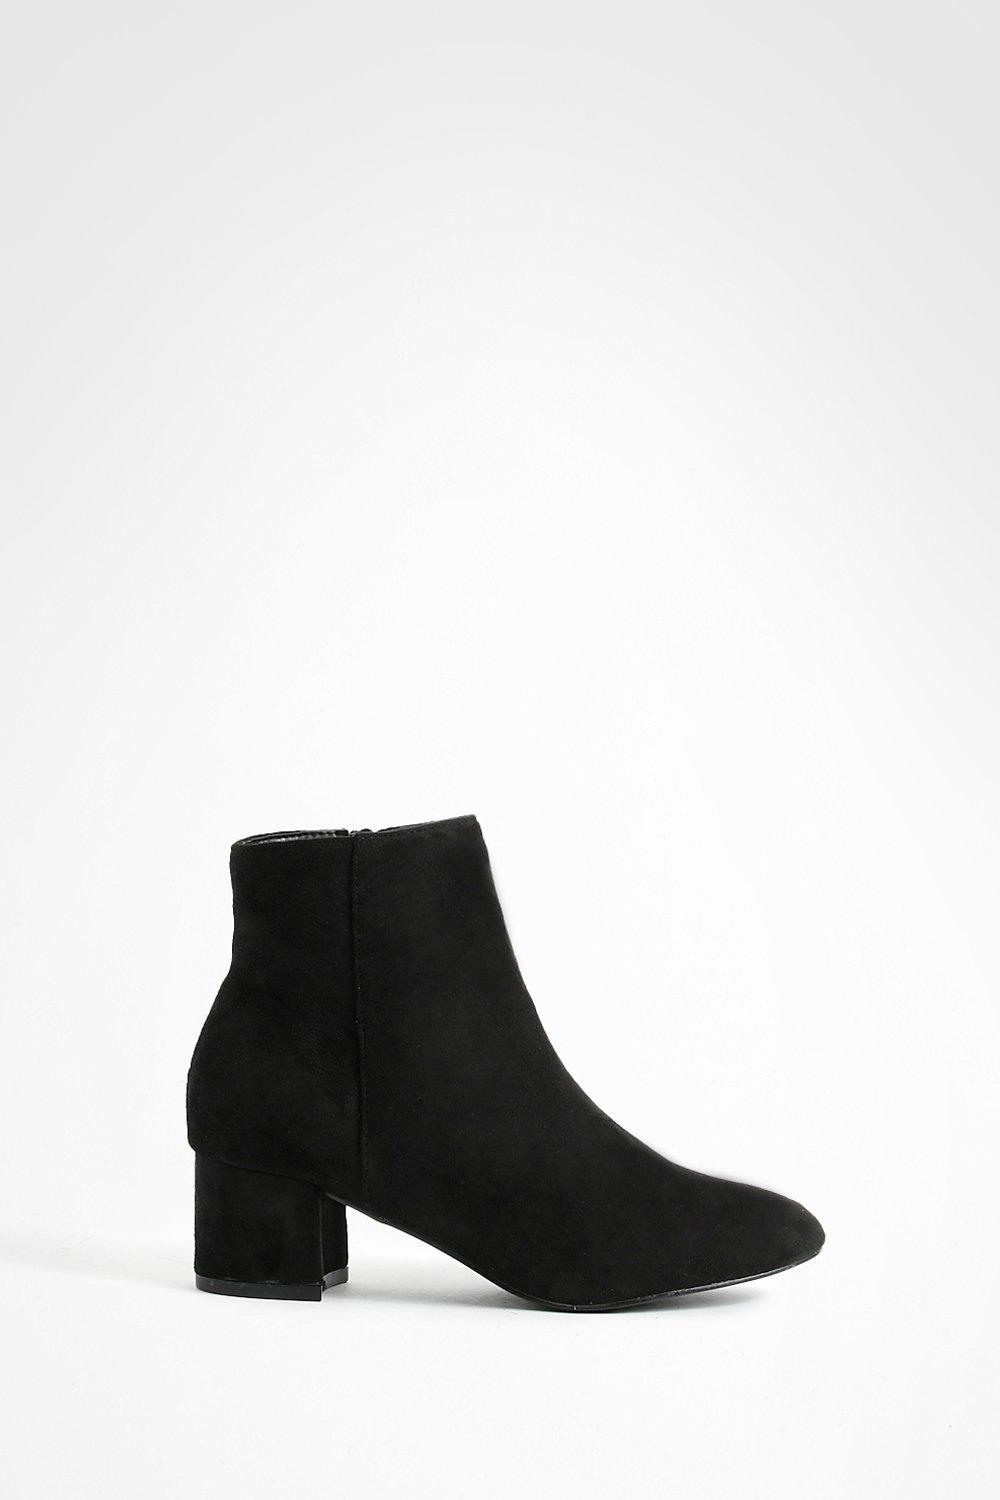 basic black heel